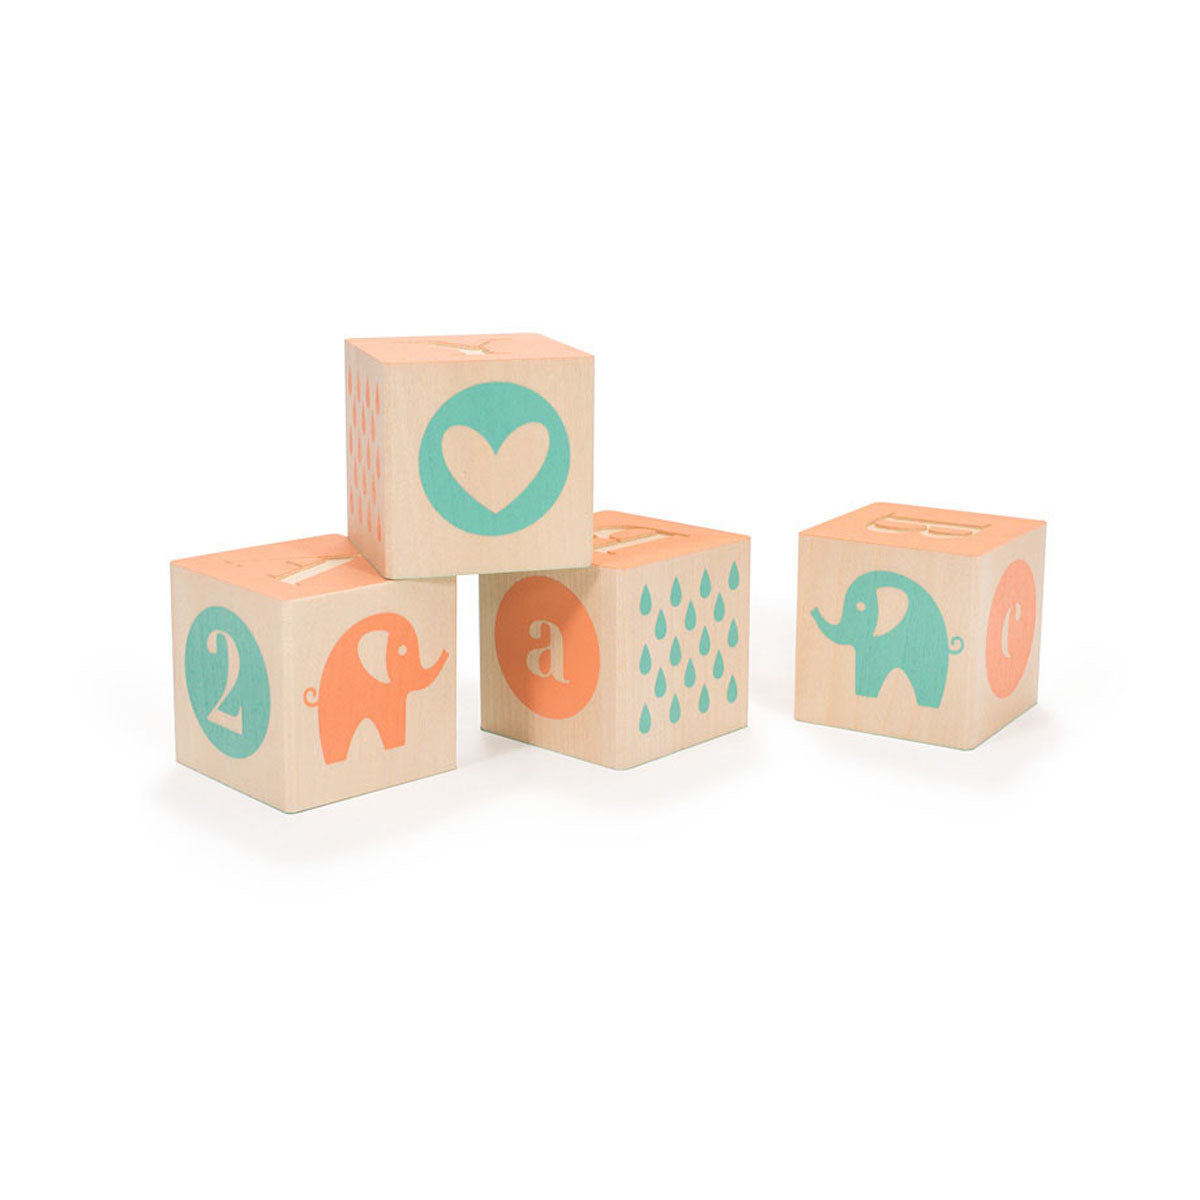 Baby Blocks : set of 4